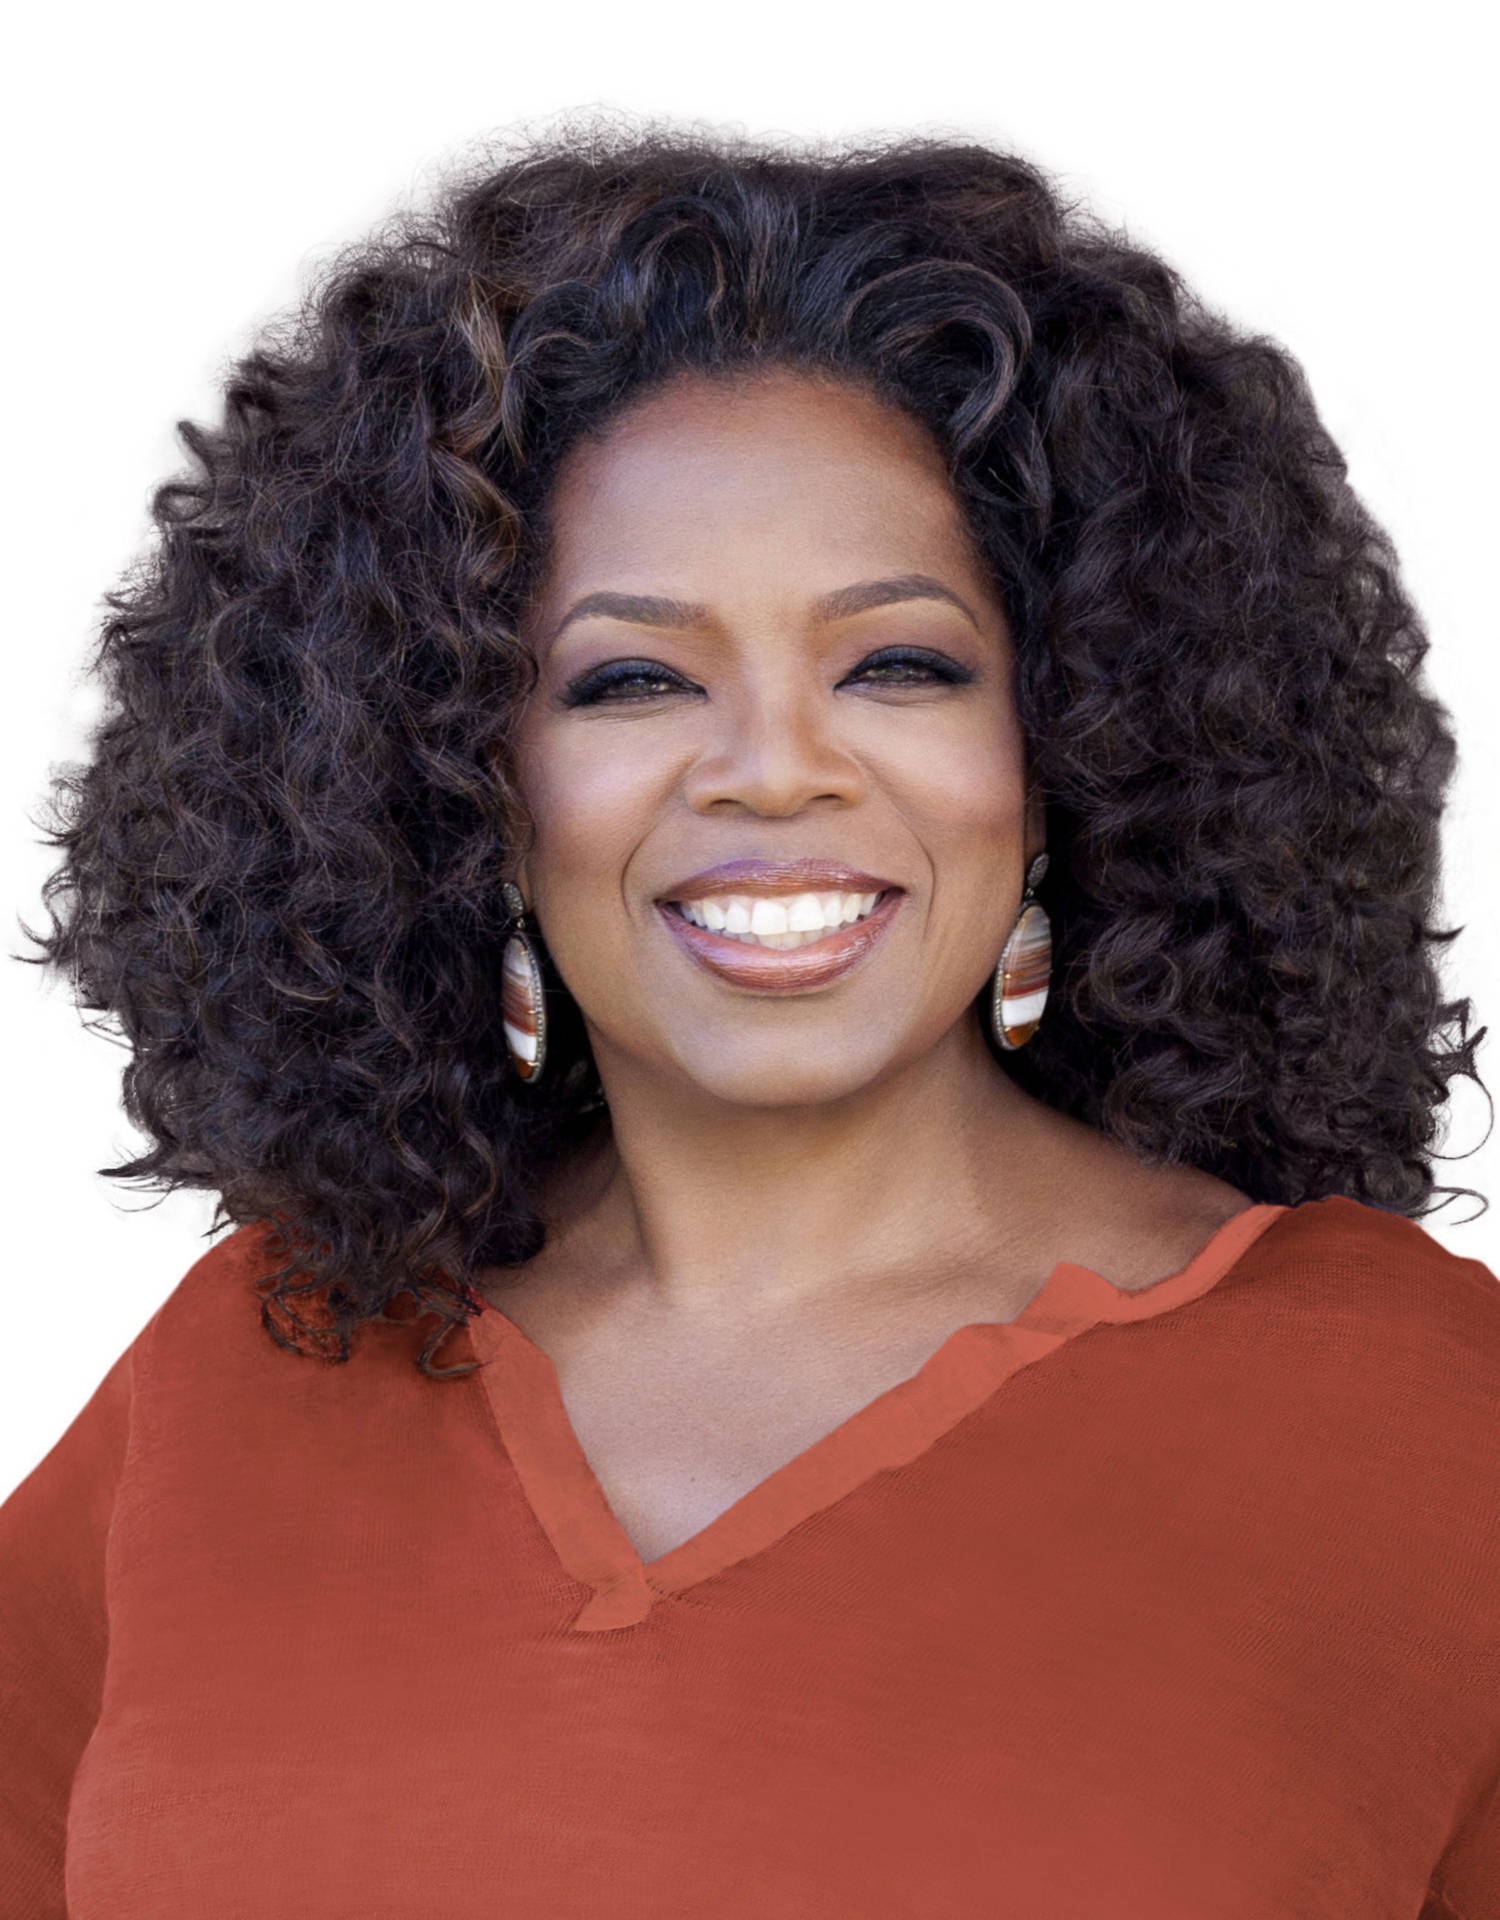 Download Oprah Winfrey In Black Outfit Wallpaper | Wallpapers.com